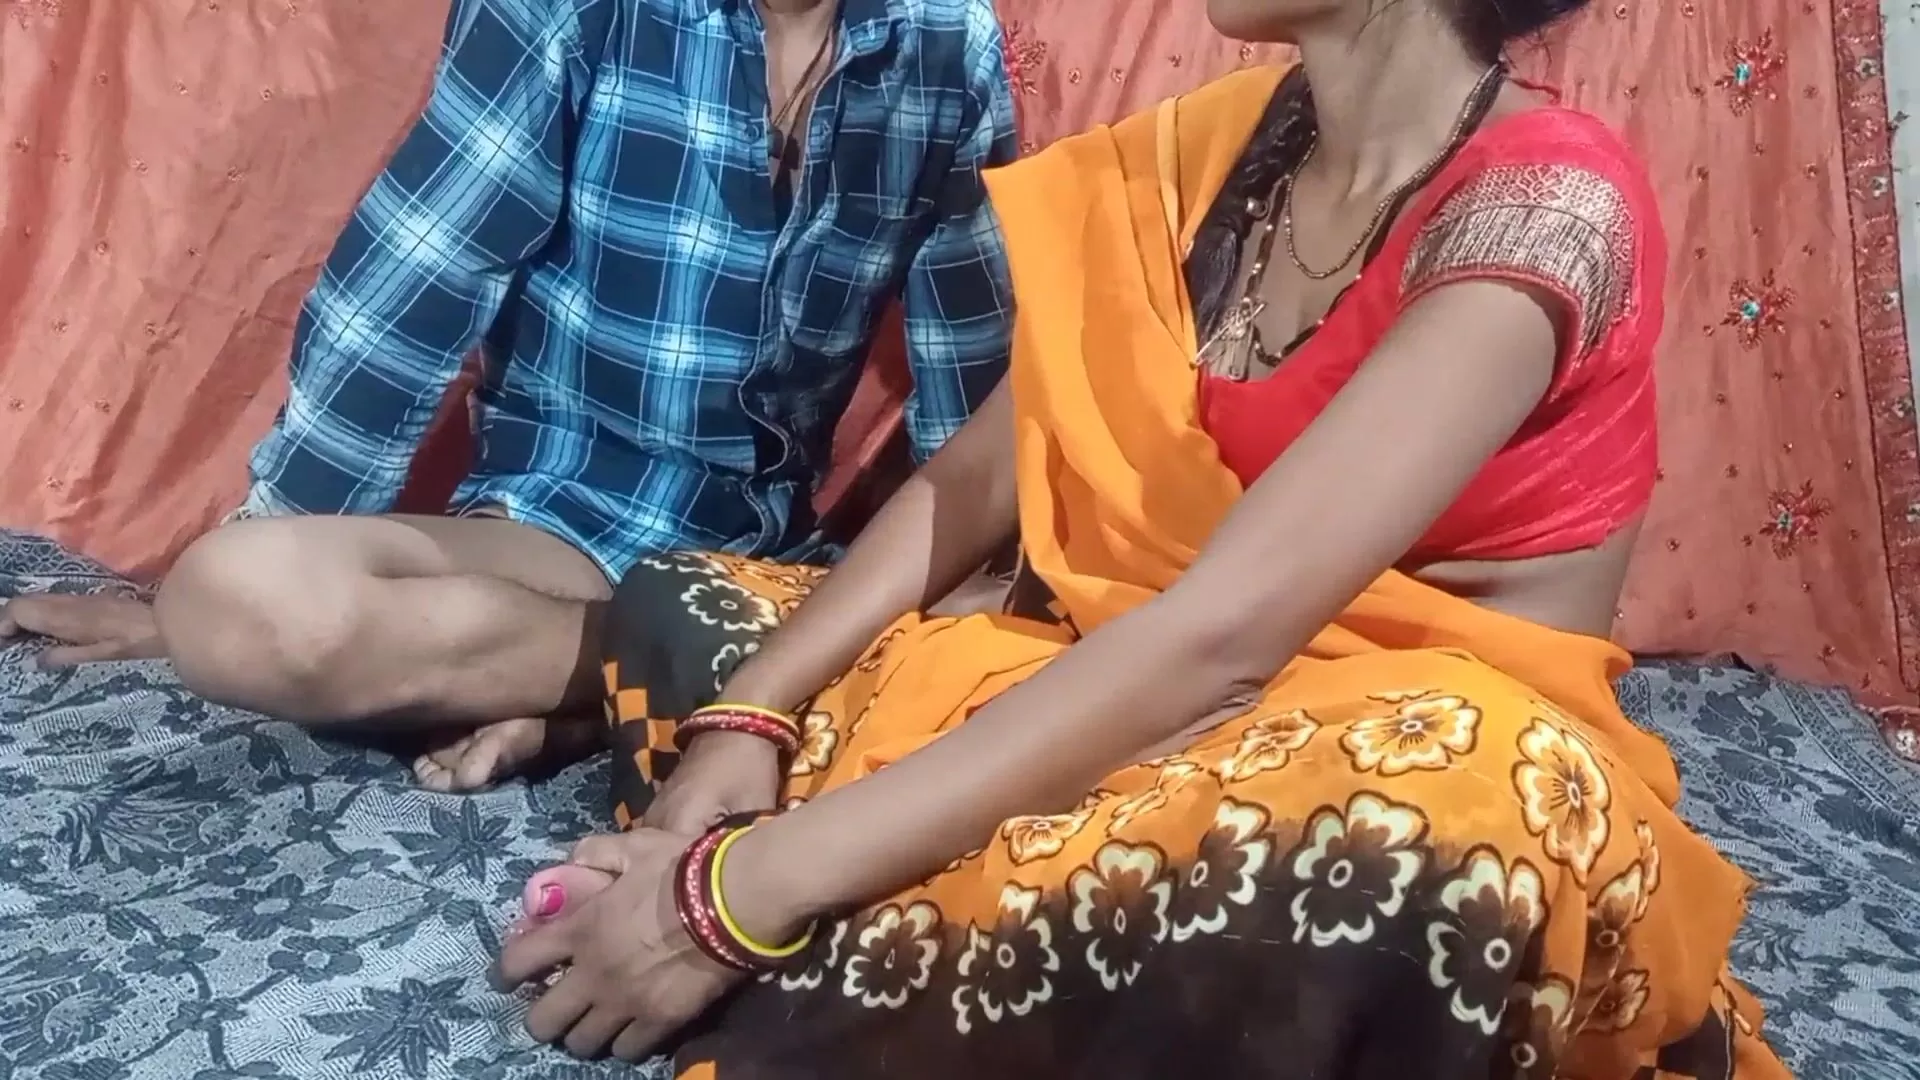 Indian wedding first night fuck part1 watch online